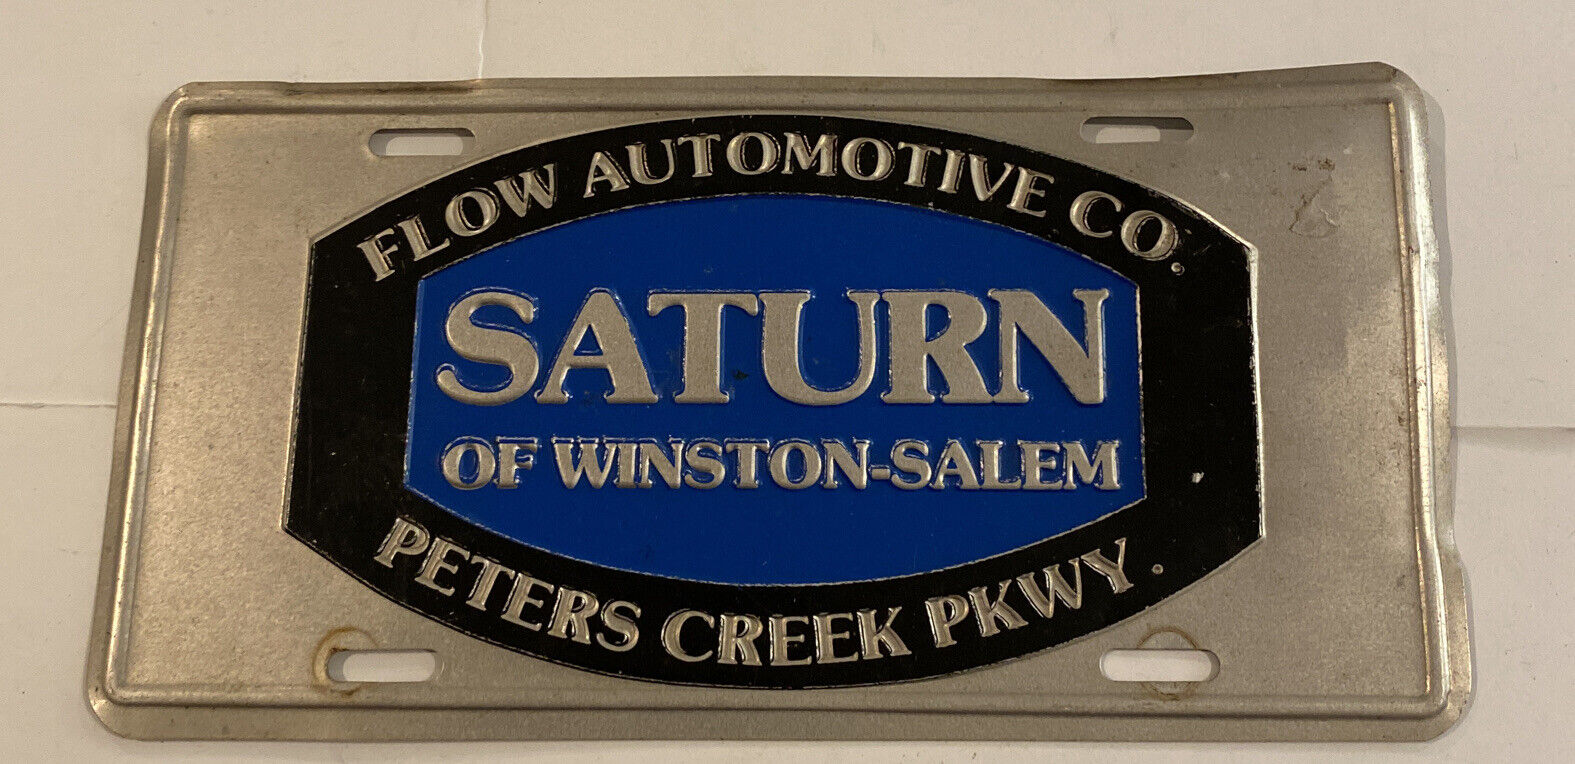 vintage flow automotive saturn of winston salem nc car tag